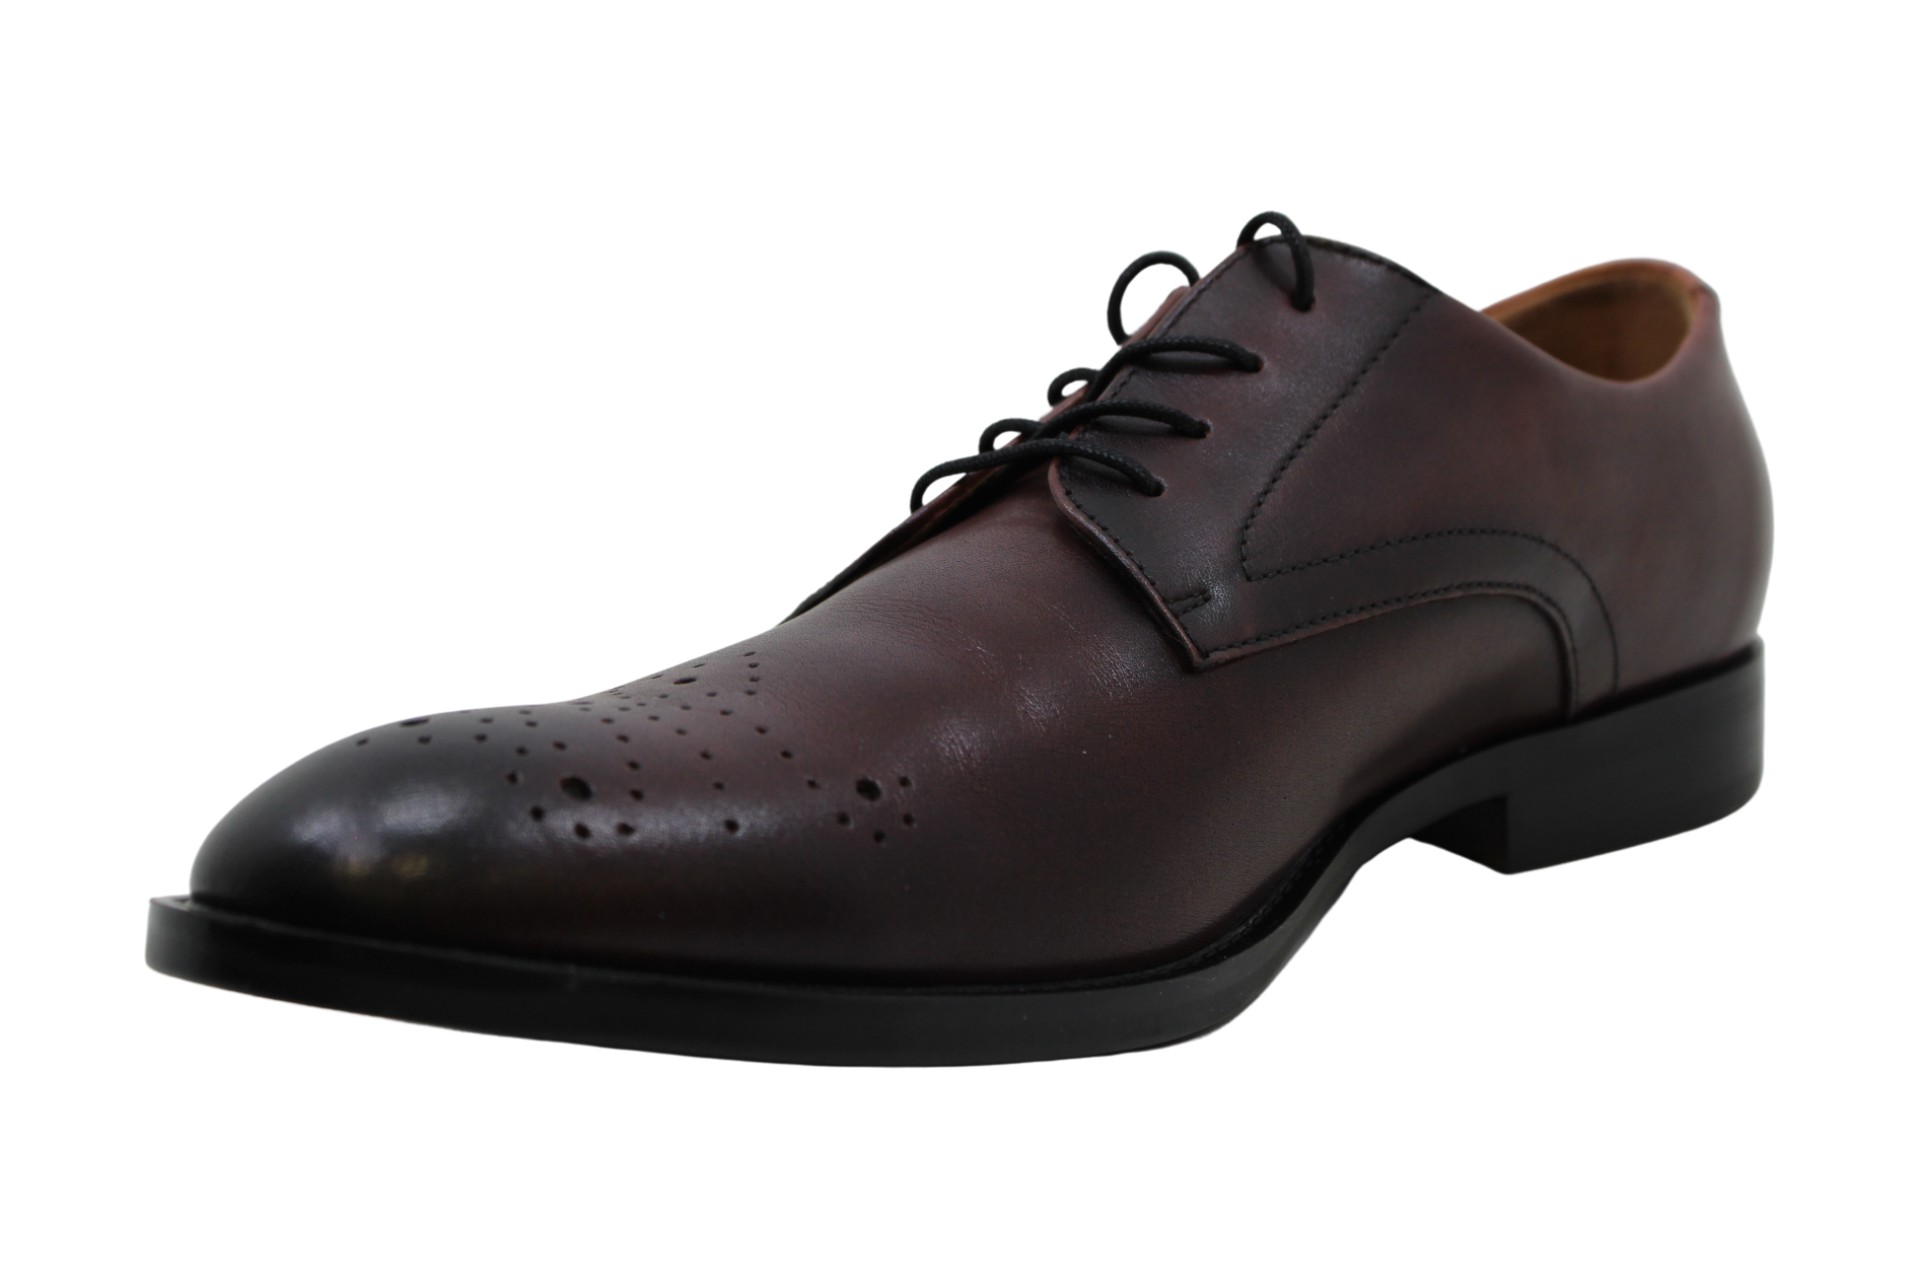 Alfani Men's Shoes Darwin Leather Lace Up Dress Oxfords, Oxblood, Size ...